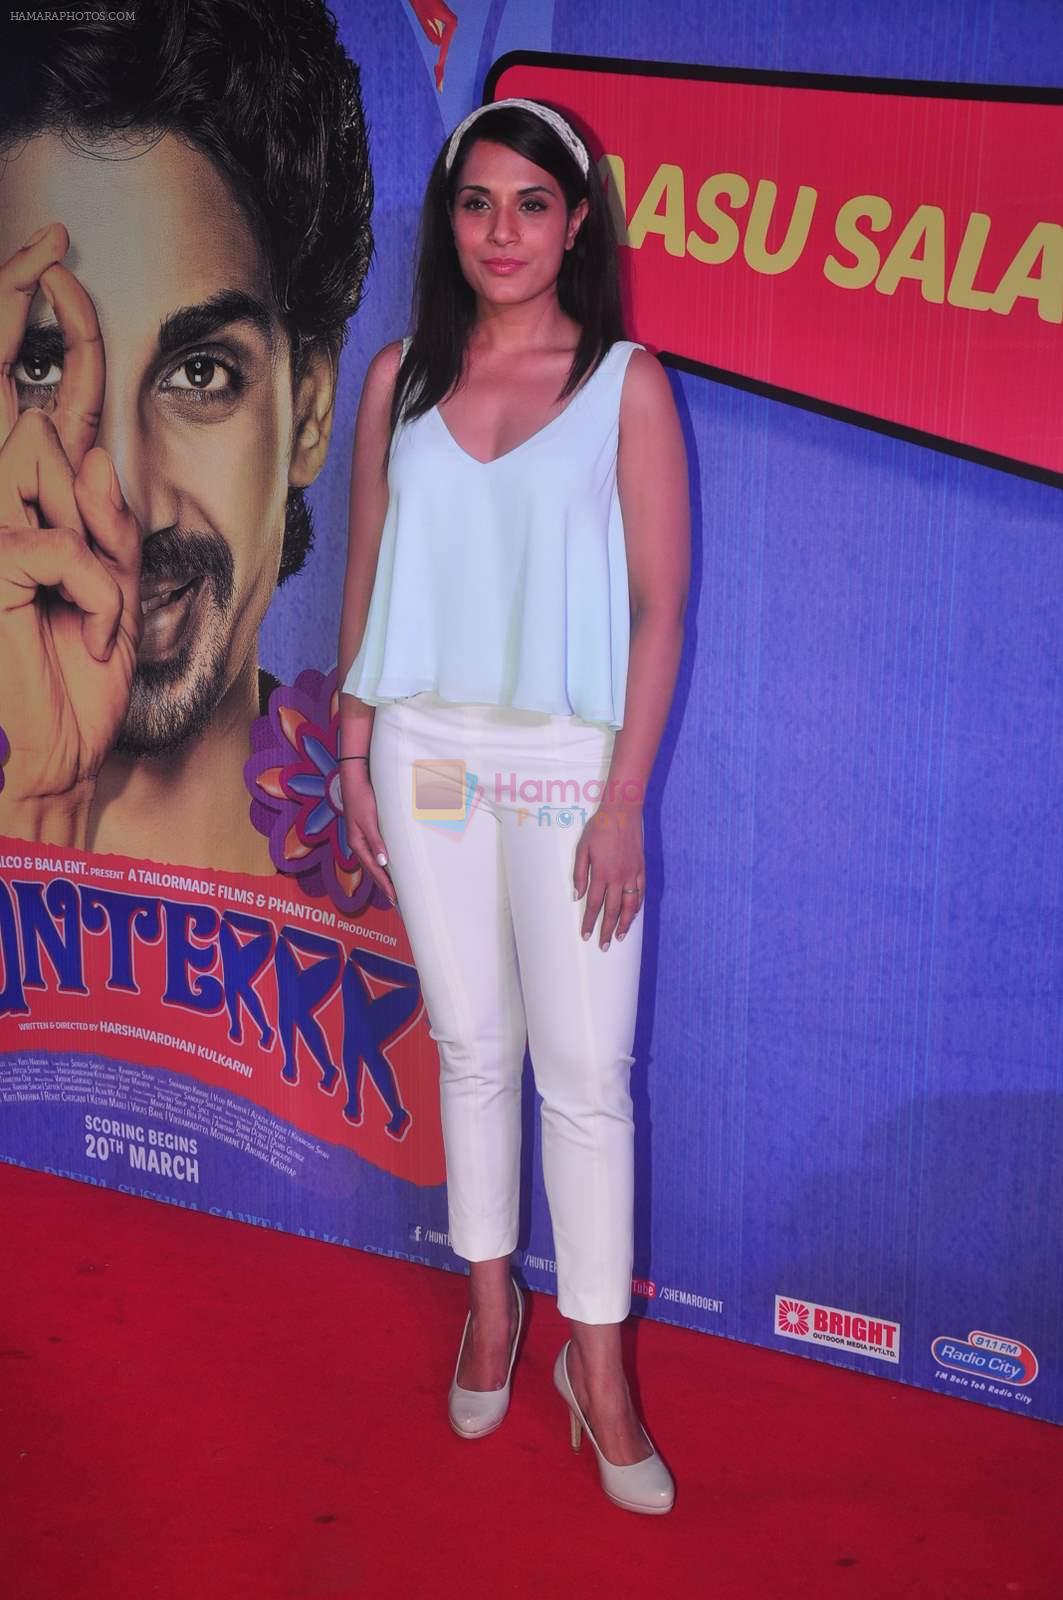 Richa Chadda at Hunterrr film premiere in Cinemax, Mumbai on 17th March 2015